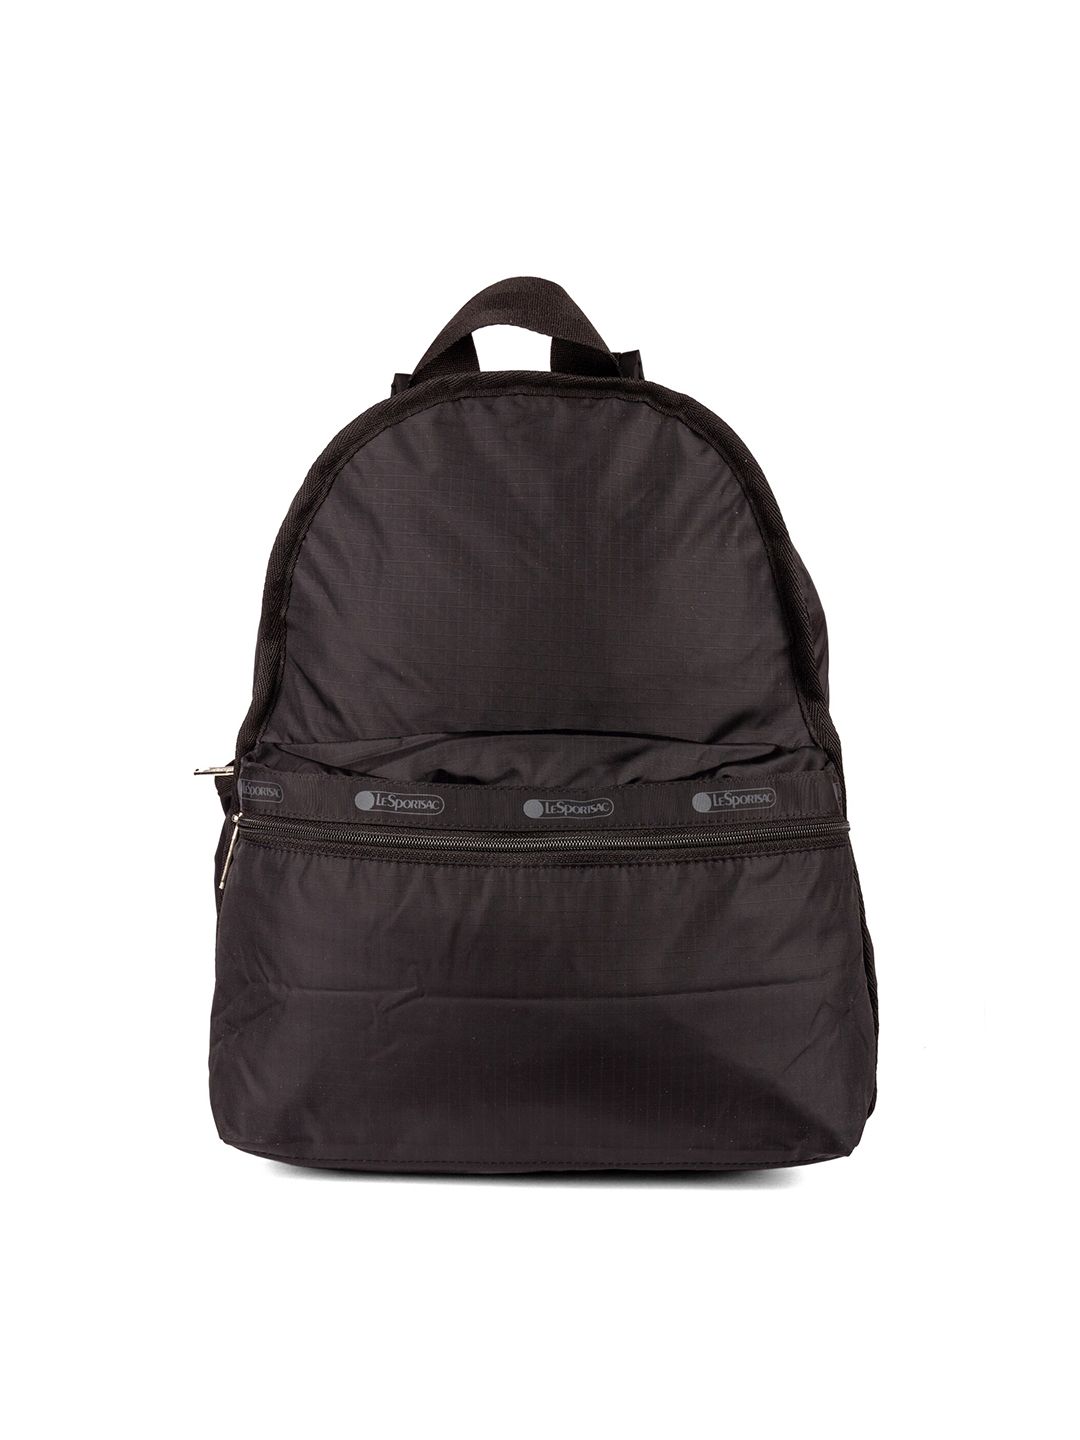 LESPORTSAC Basic Range Black Color Soft One Size Backpack Price in India